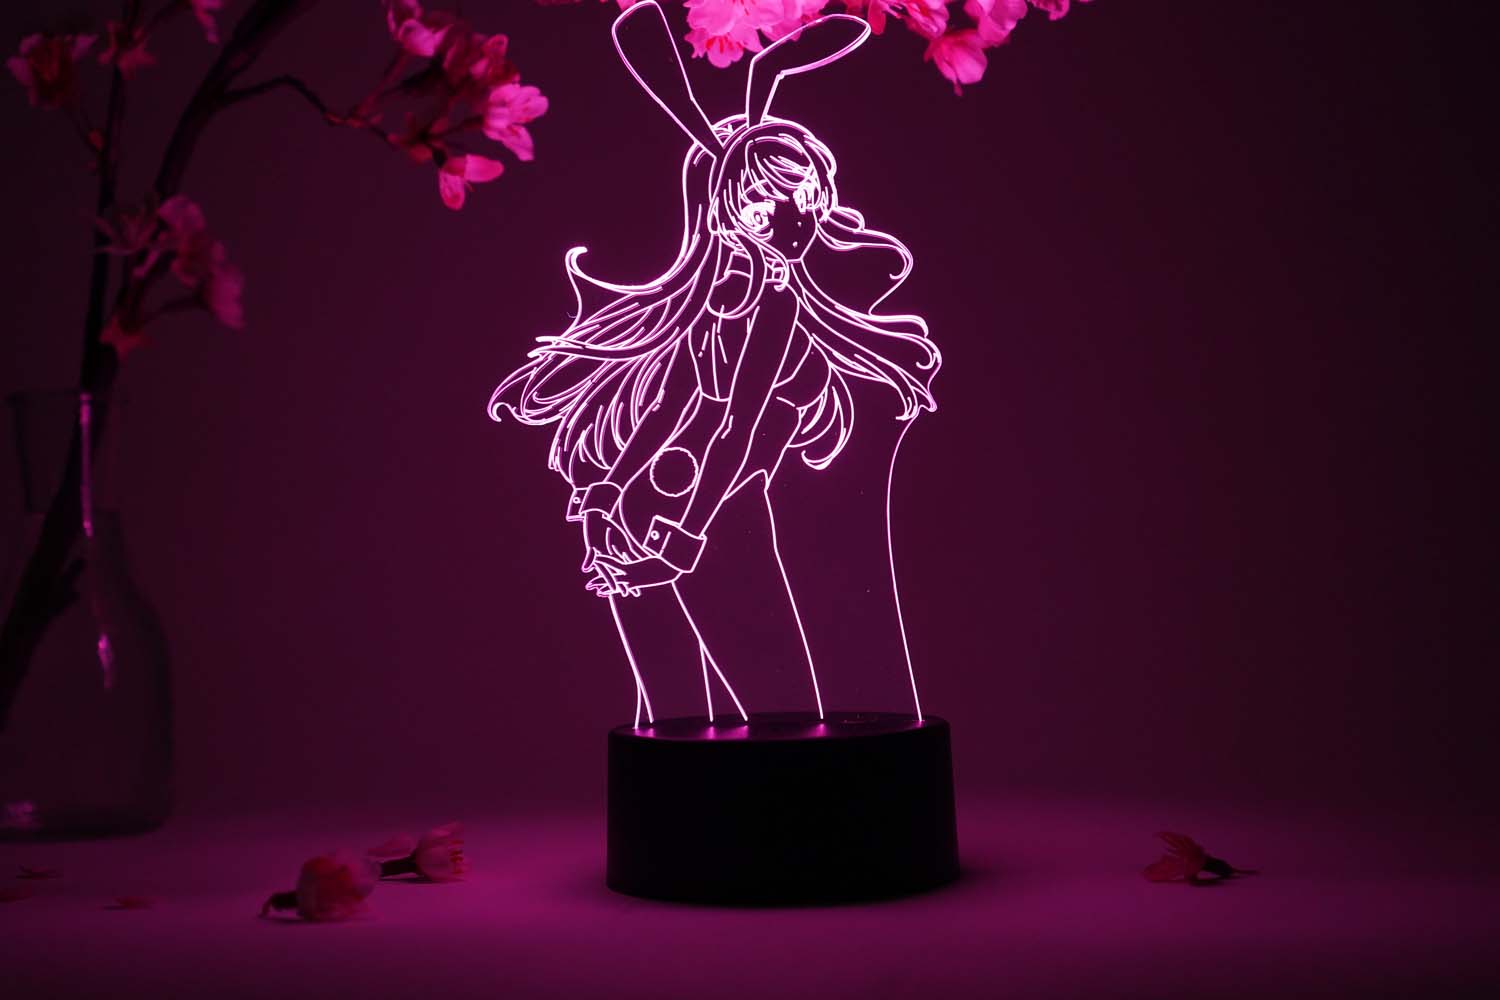 Bunny Girl Senpai Otaku Lamp (Rascal Does Not Dream of Bunny Girl Senpai)